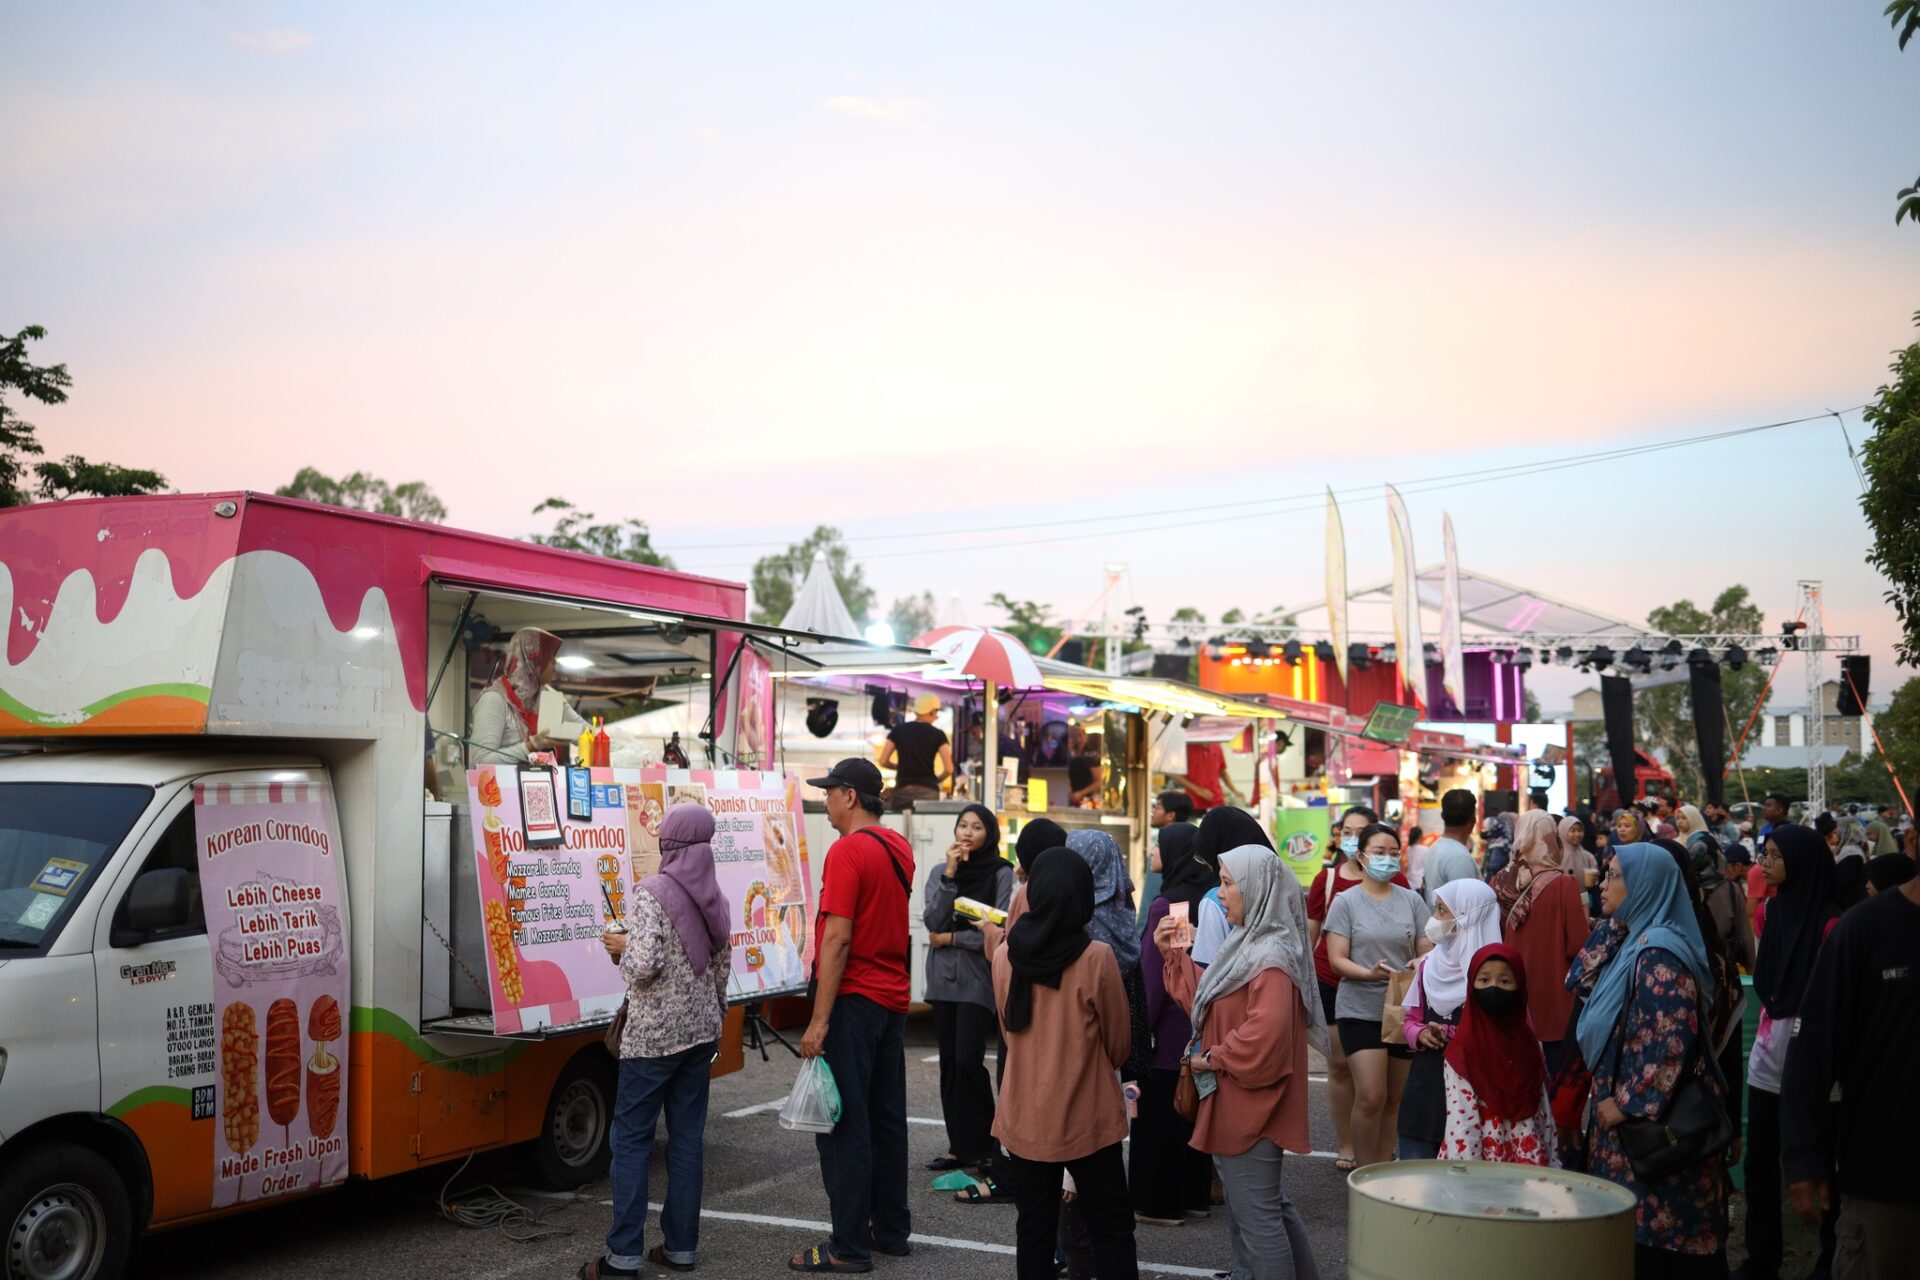 Penang International Food Festival - Food trucks and queues